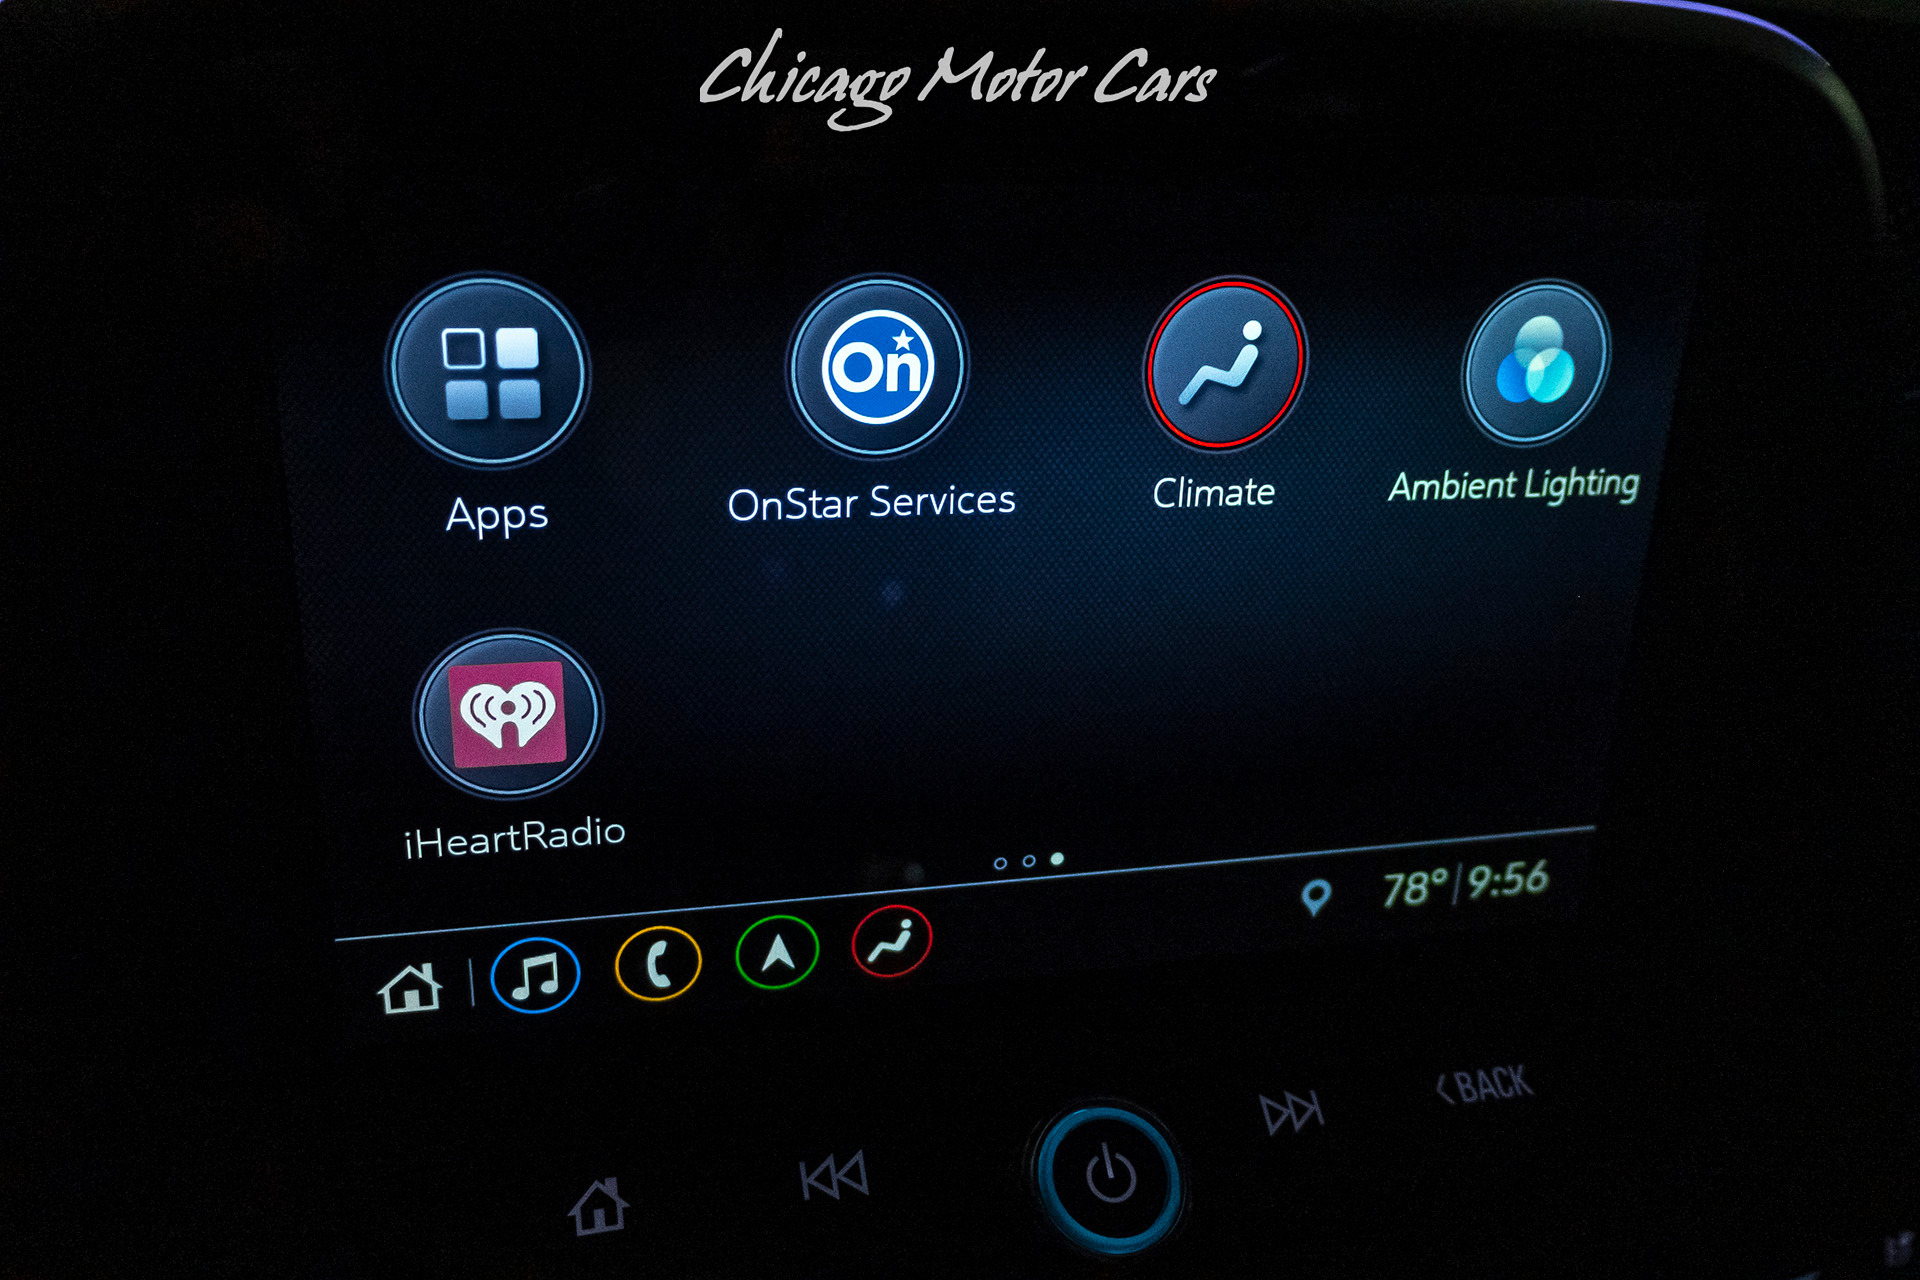 Used-2019-Chevrolet-Camaro-ZL1-1LE-MANUAL-Carbon-Fiber-Interior-Pkg